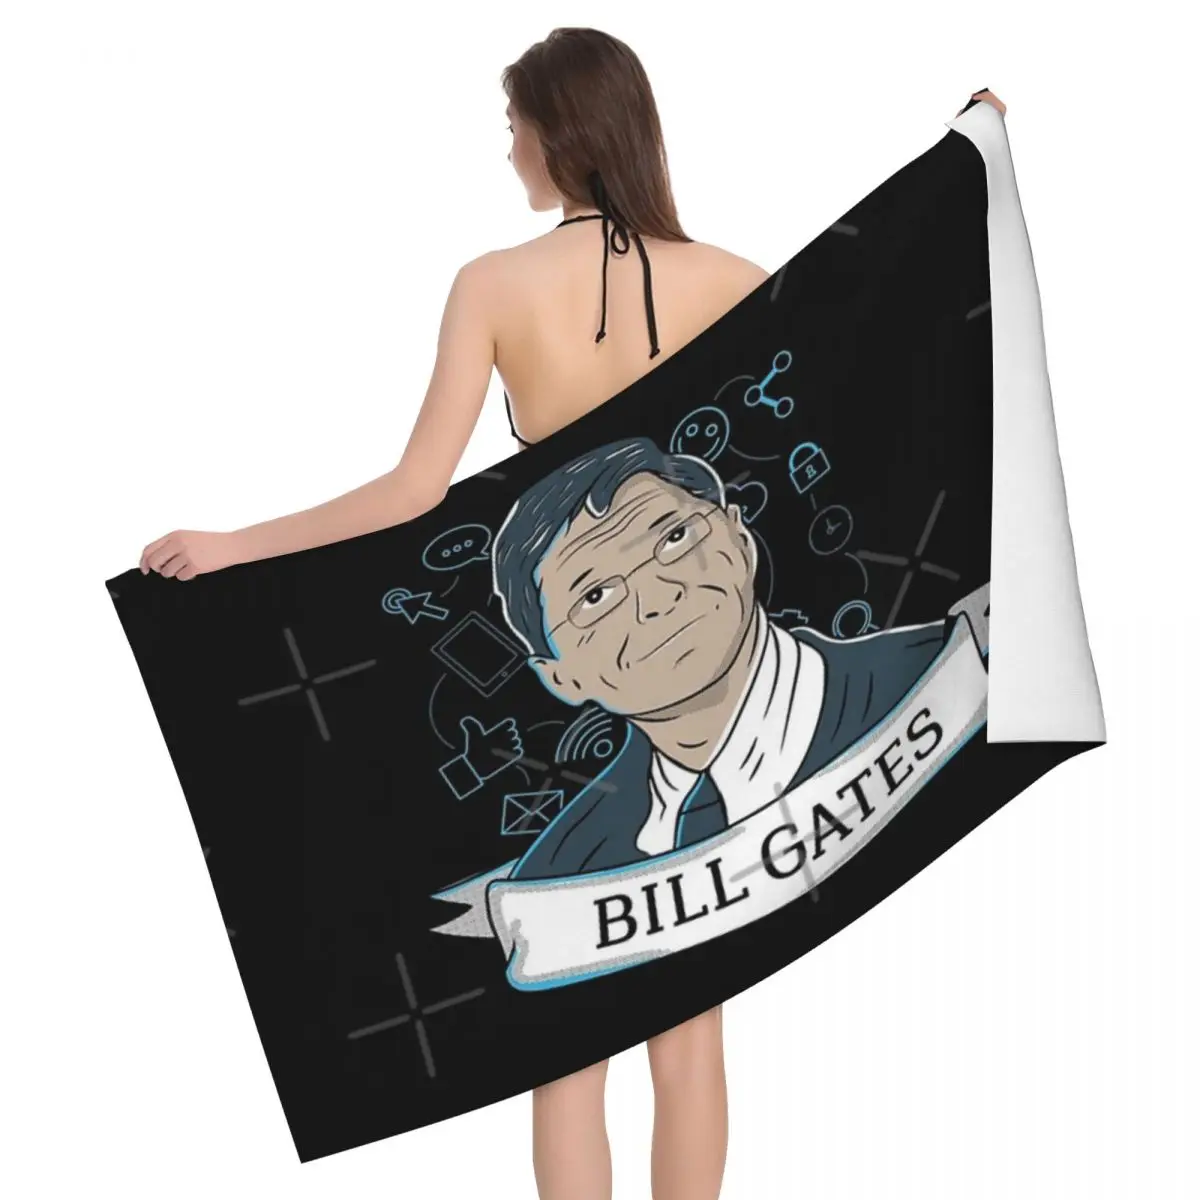 

Bill Gates 80x130cm Bath Towel Skin-friendly For Pool Souvenir Gift